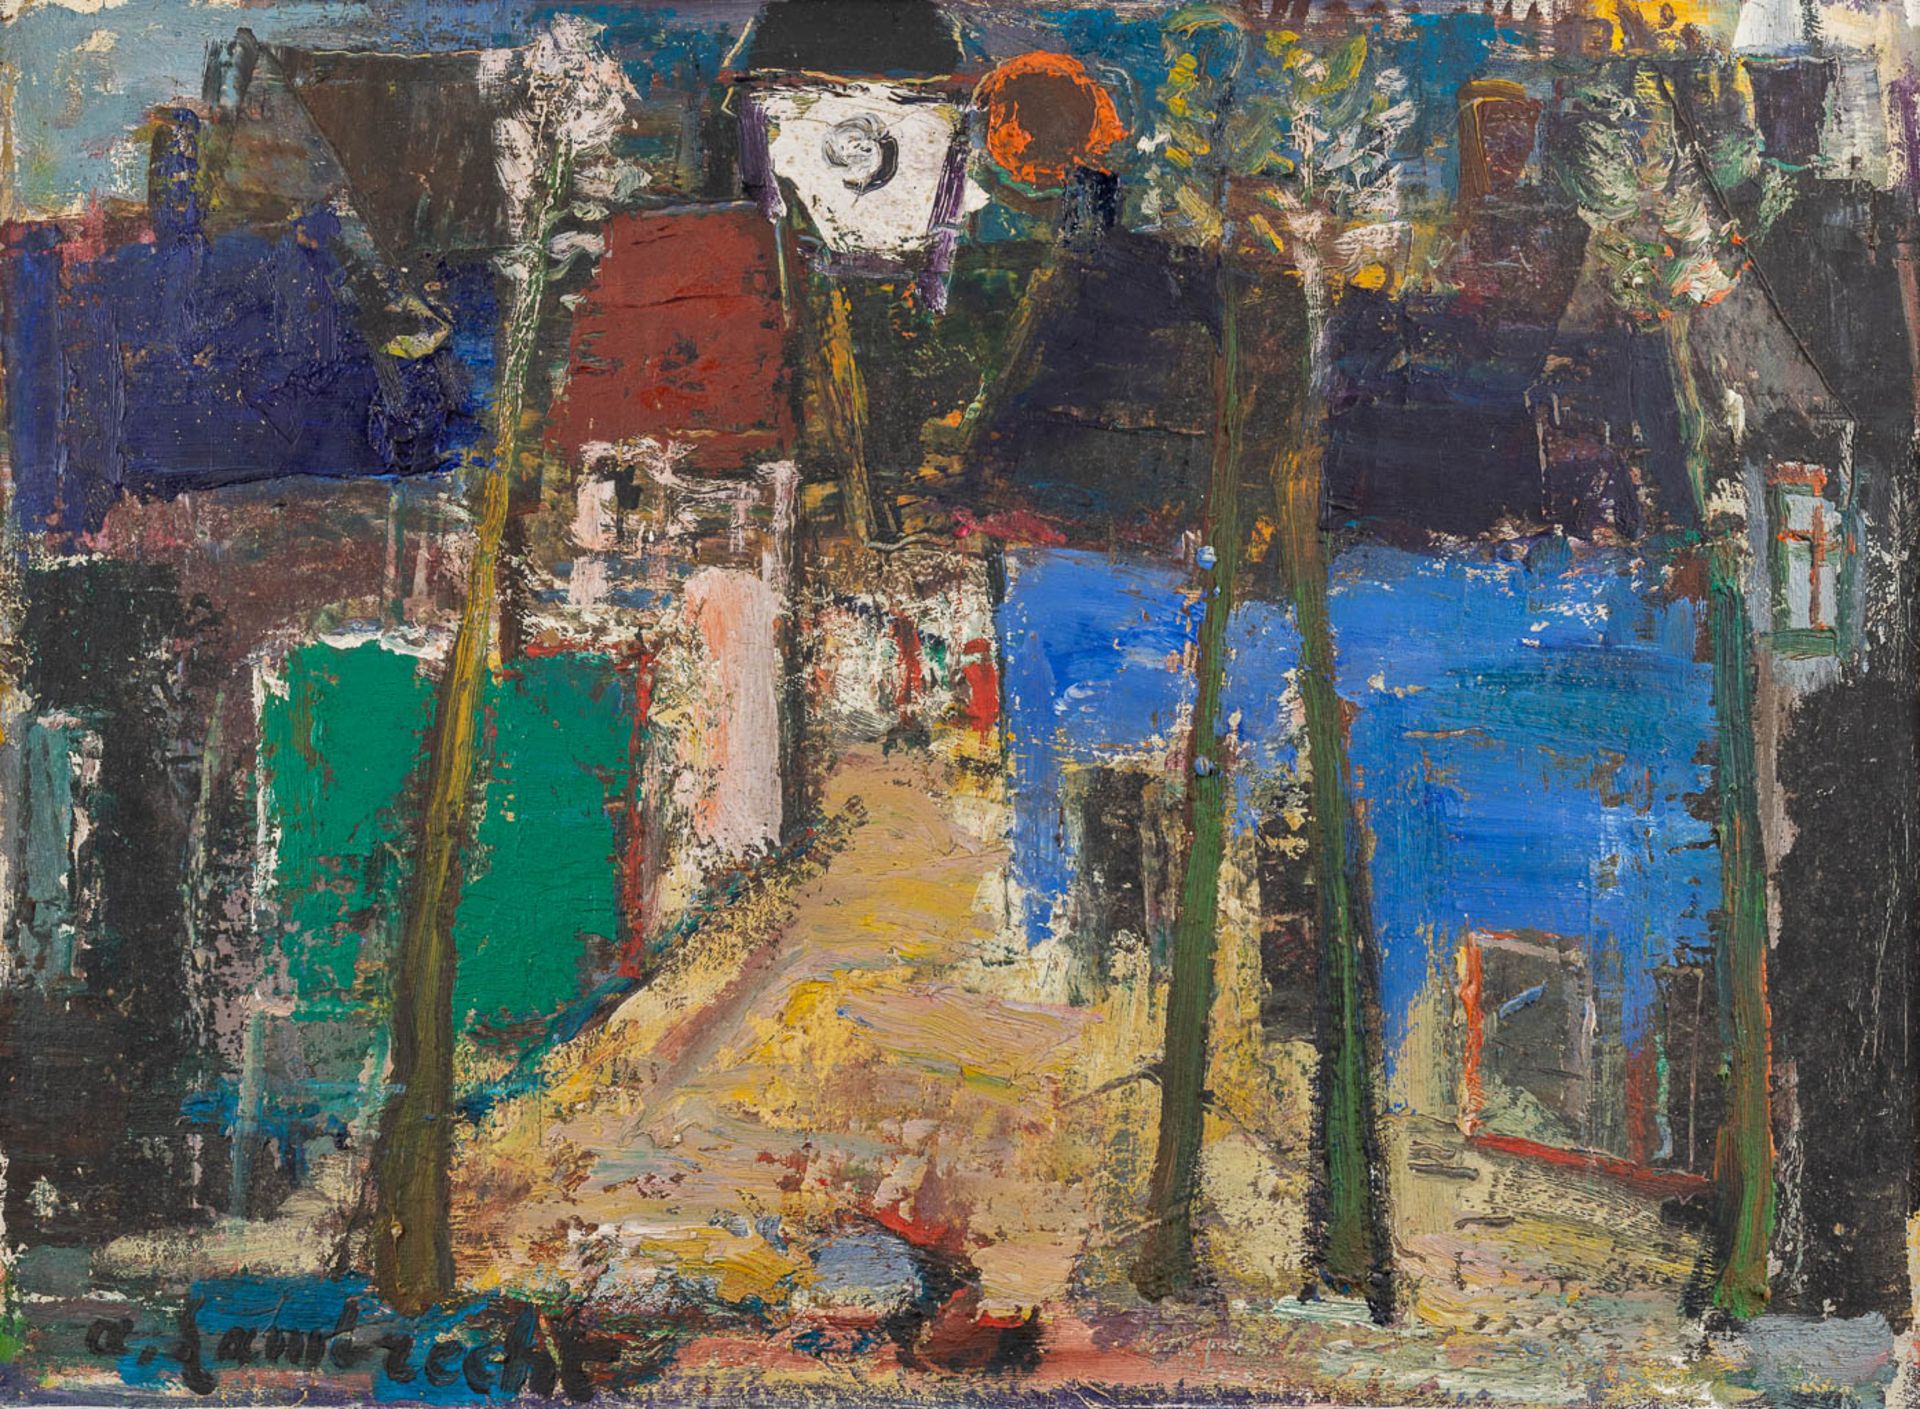 Arthur LAMBRECHT (1904-1983) 'Expressionist Village' oil on board. (W: 75 x H: 55 cm)